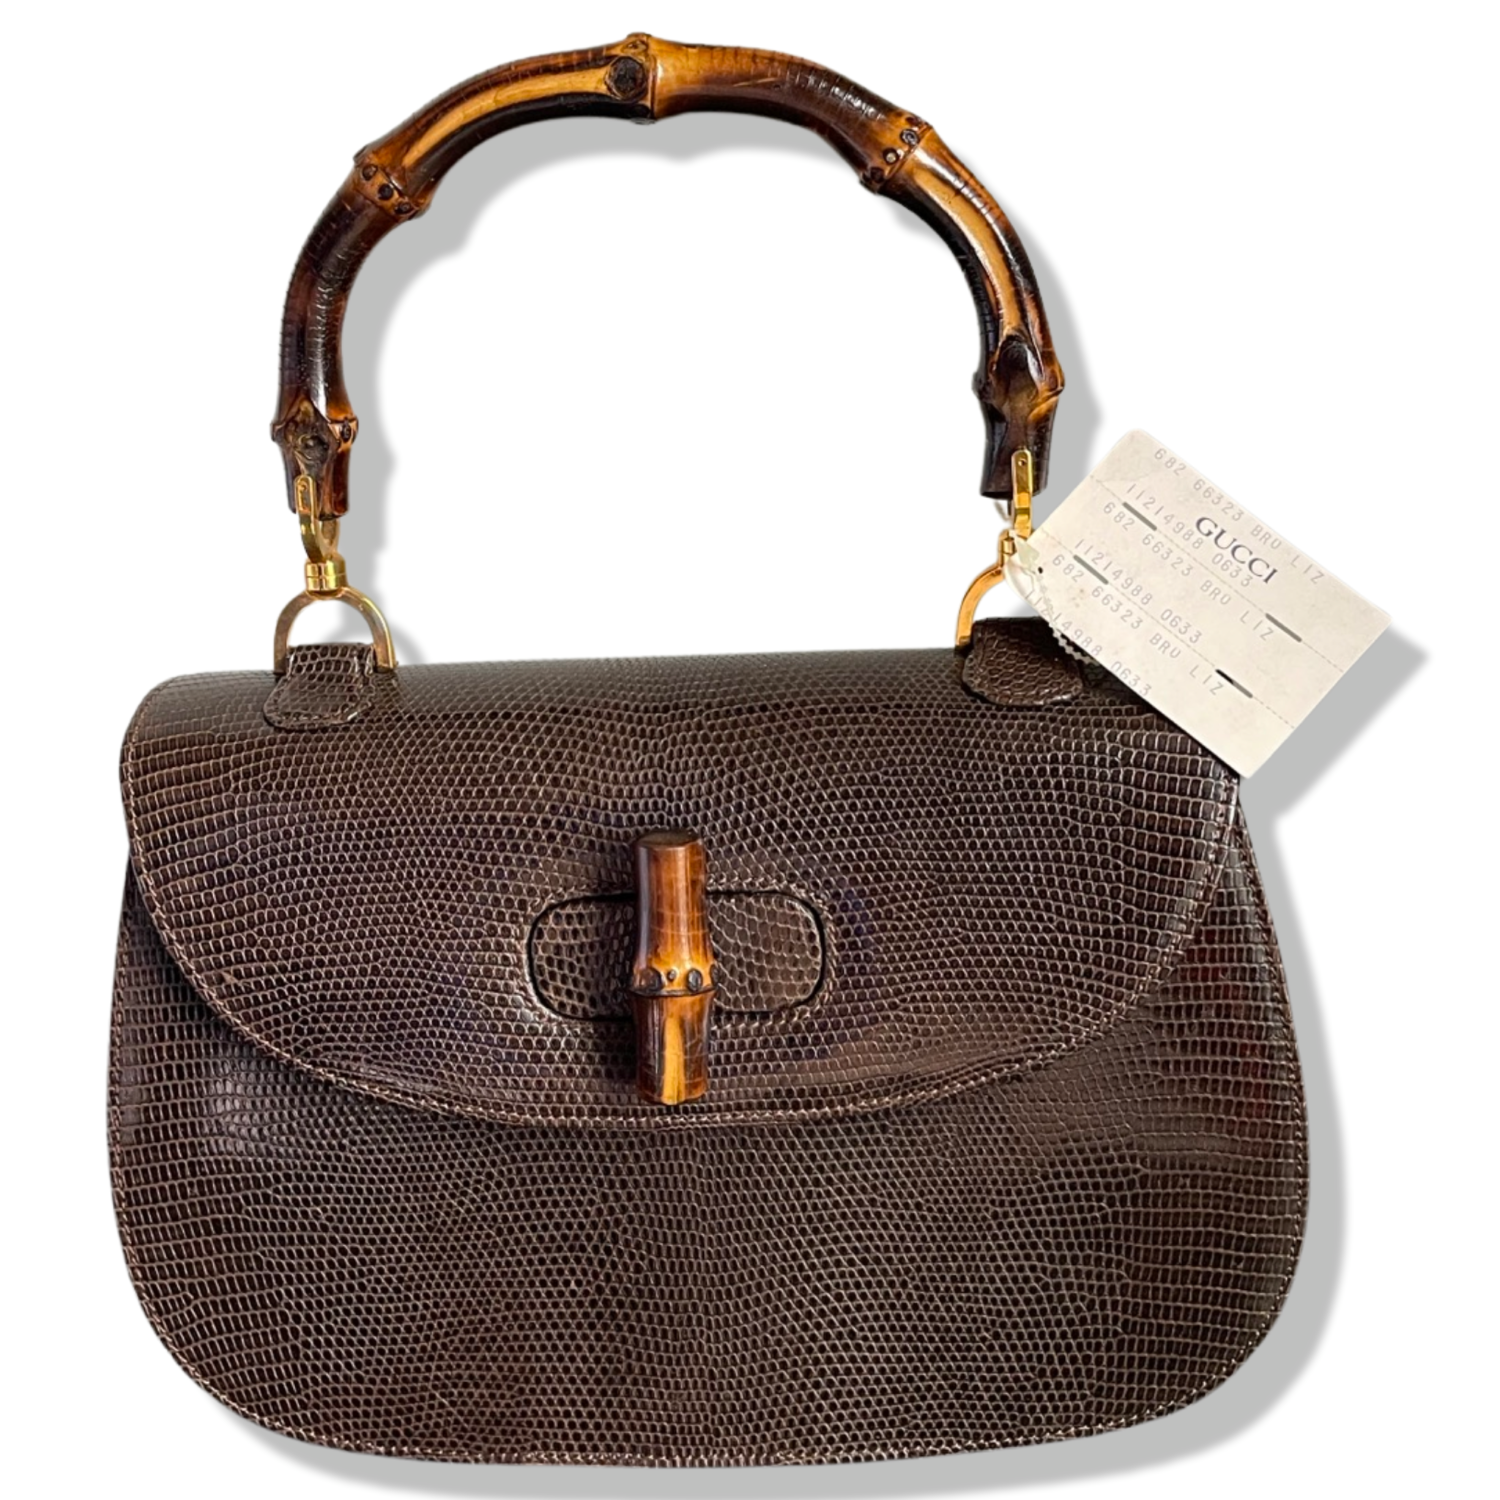 Pre-Owned Gucci Handbags in Pre-Owned Designer Handbags